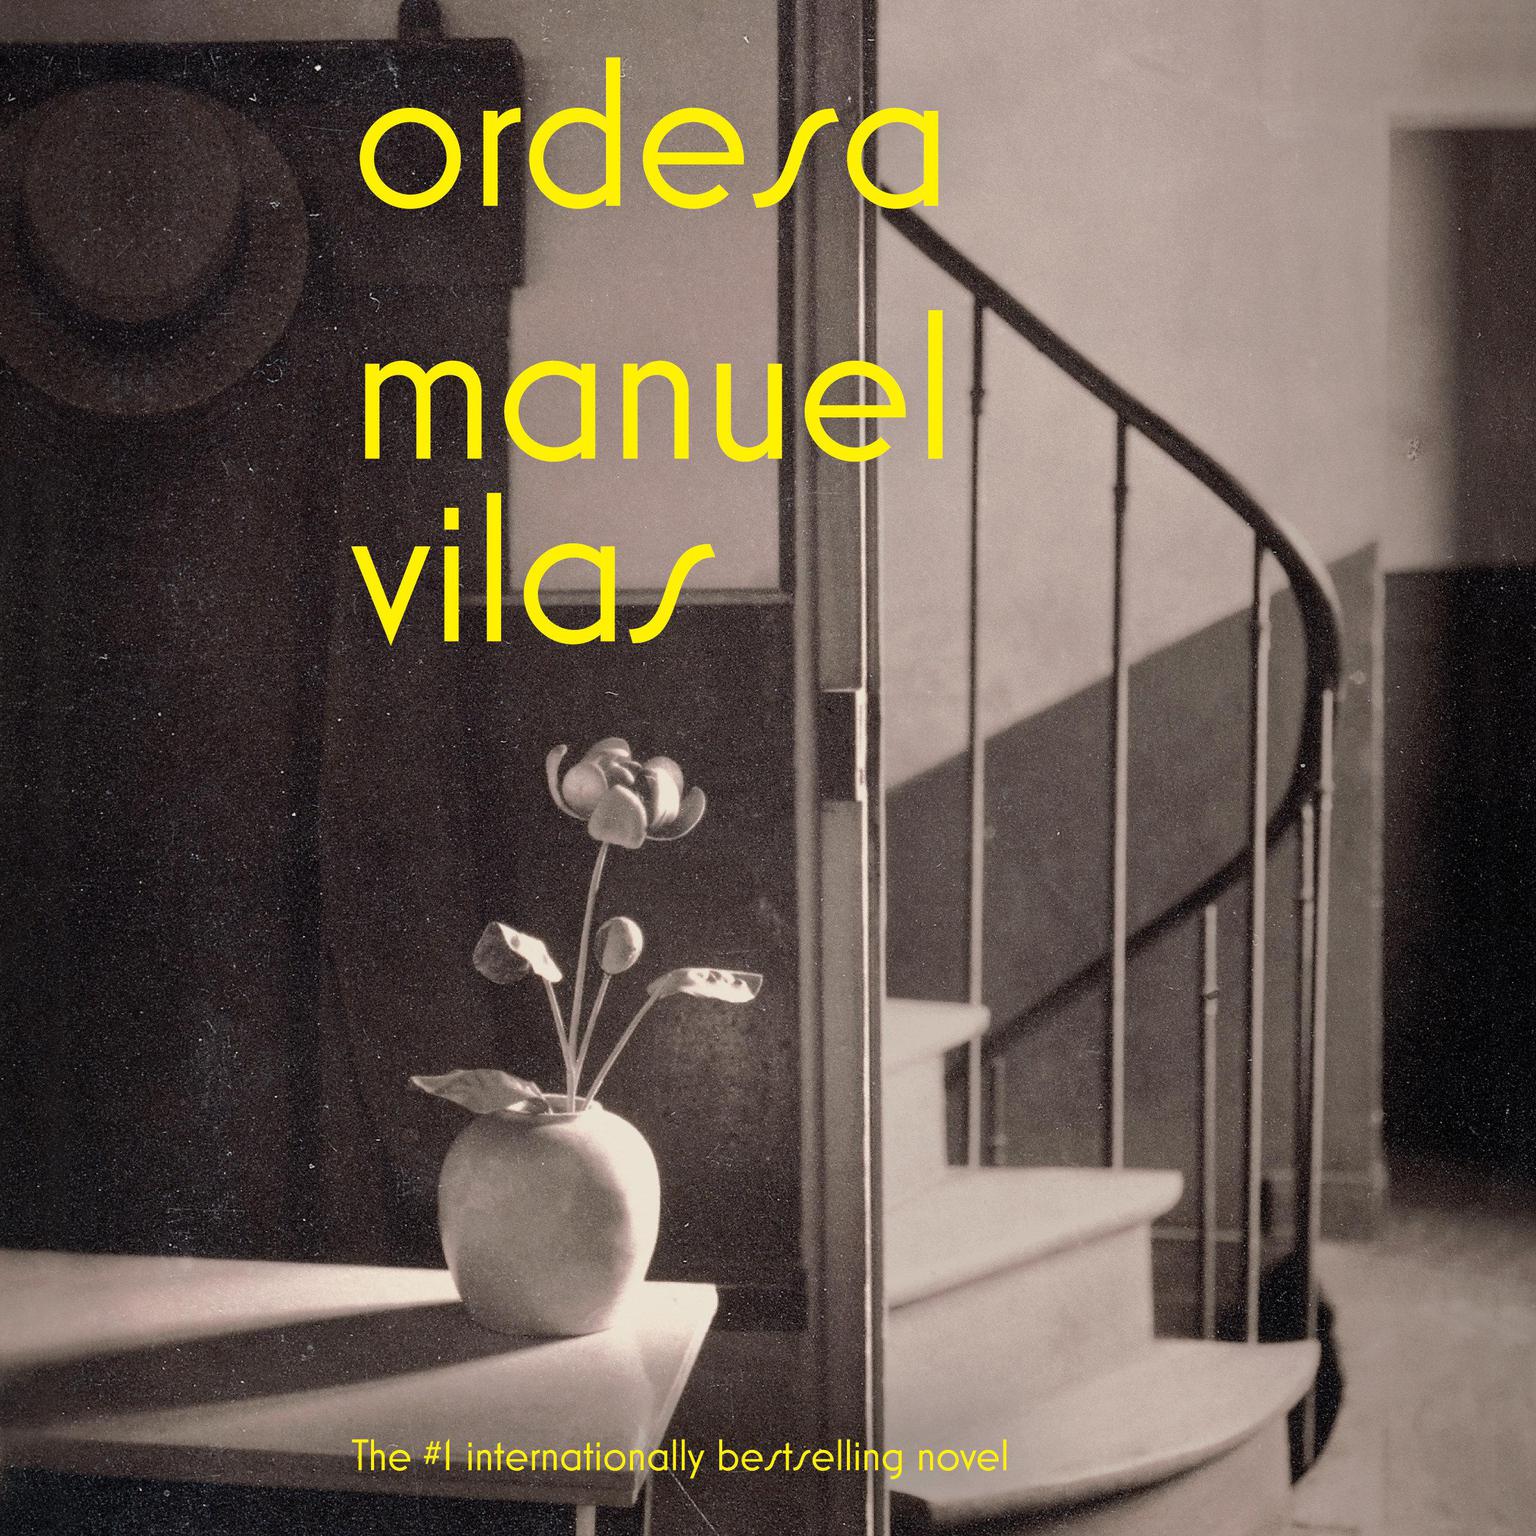 Ordesa: A Novel Audiobook, by Manuel Vilas